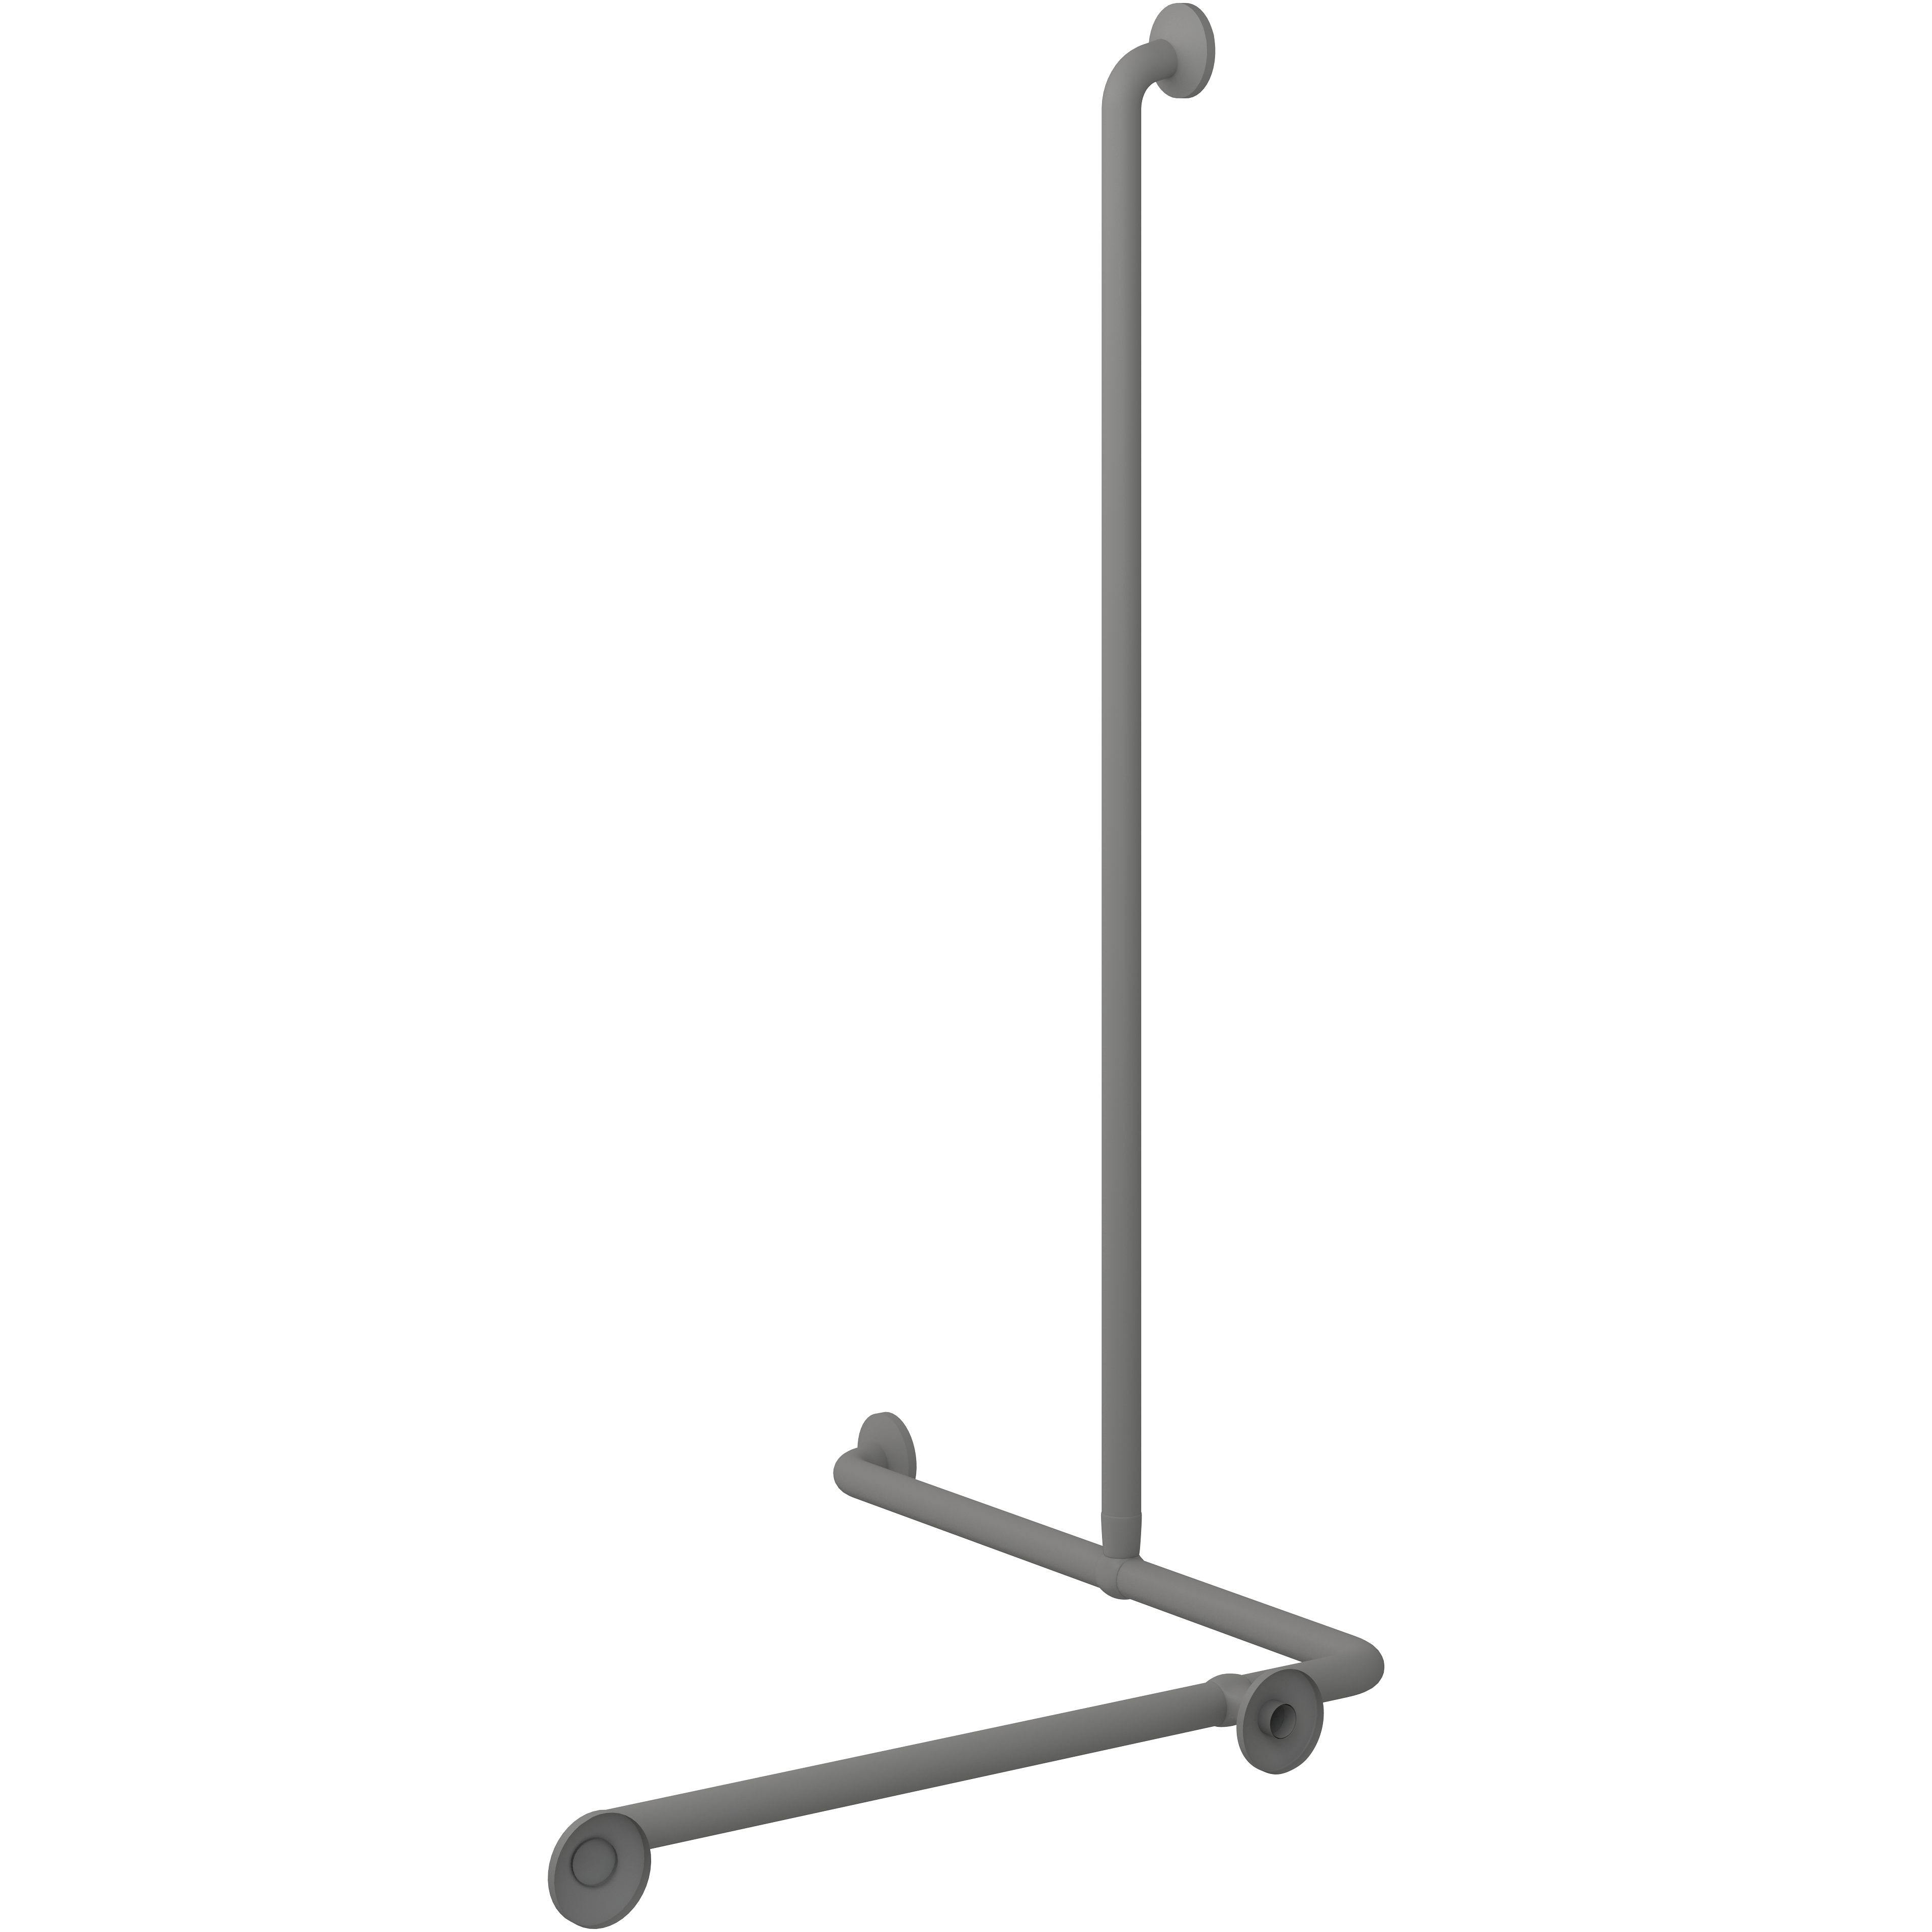 PLUS handrail corner shower combination, reversible left/right, 762 x 762 x 1250 mm